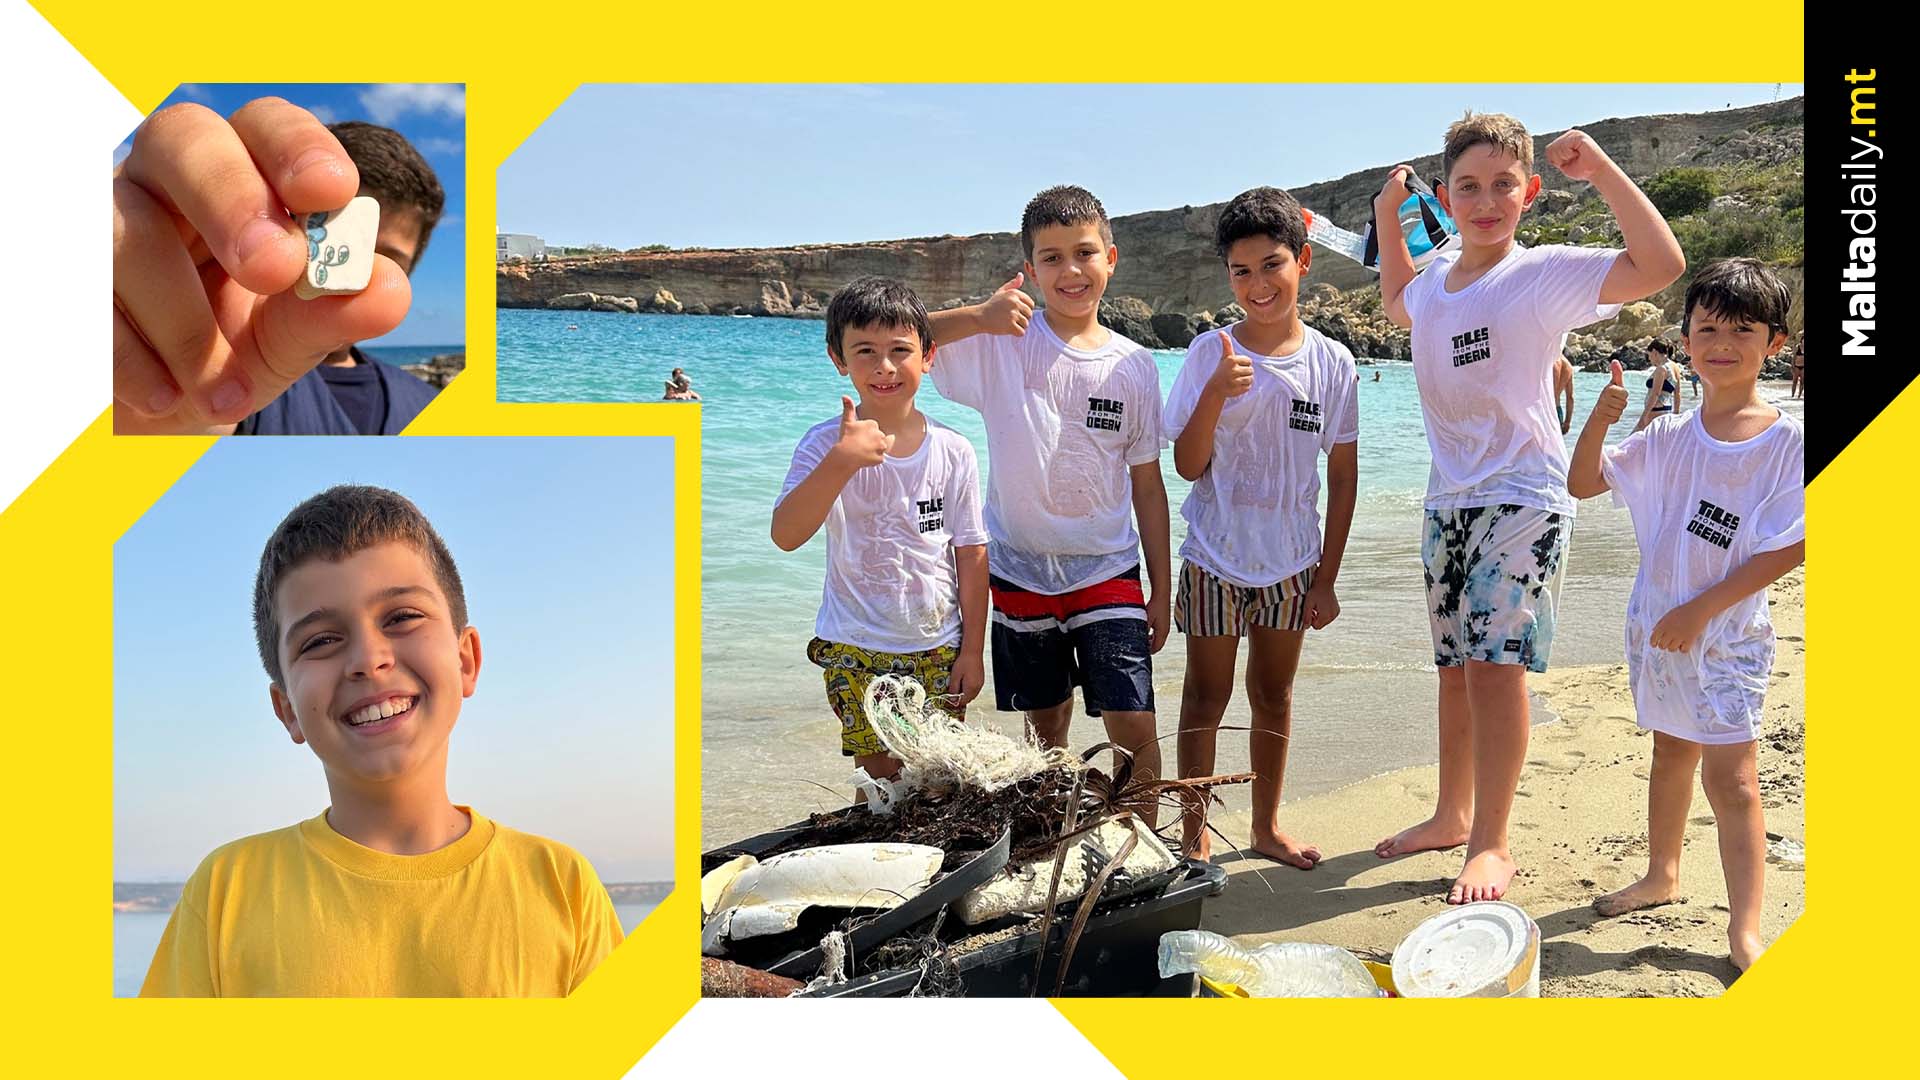 The Boy Tackling Illegal Dumping In Malta's Seas